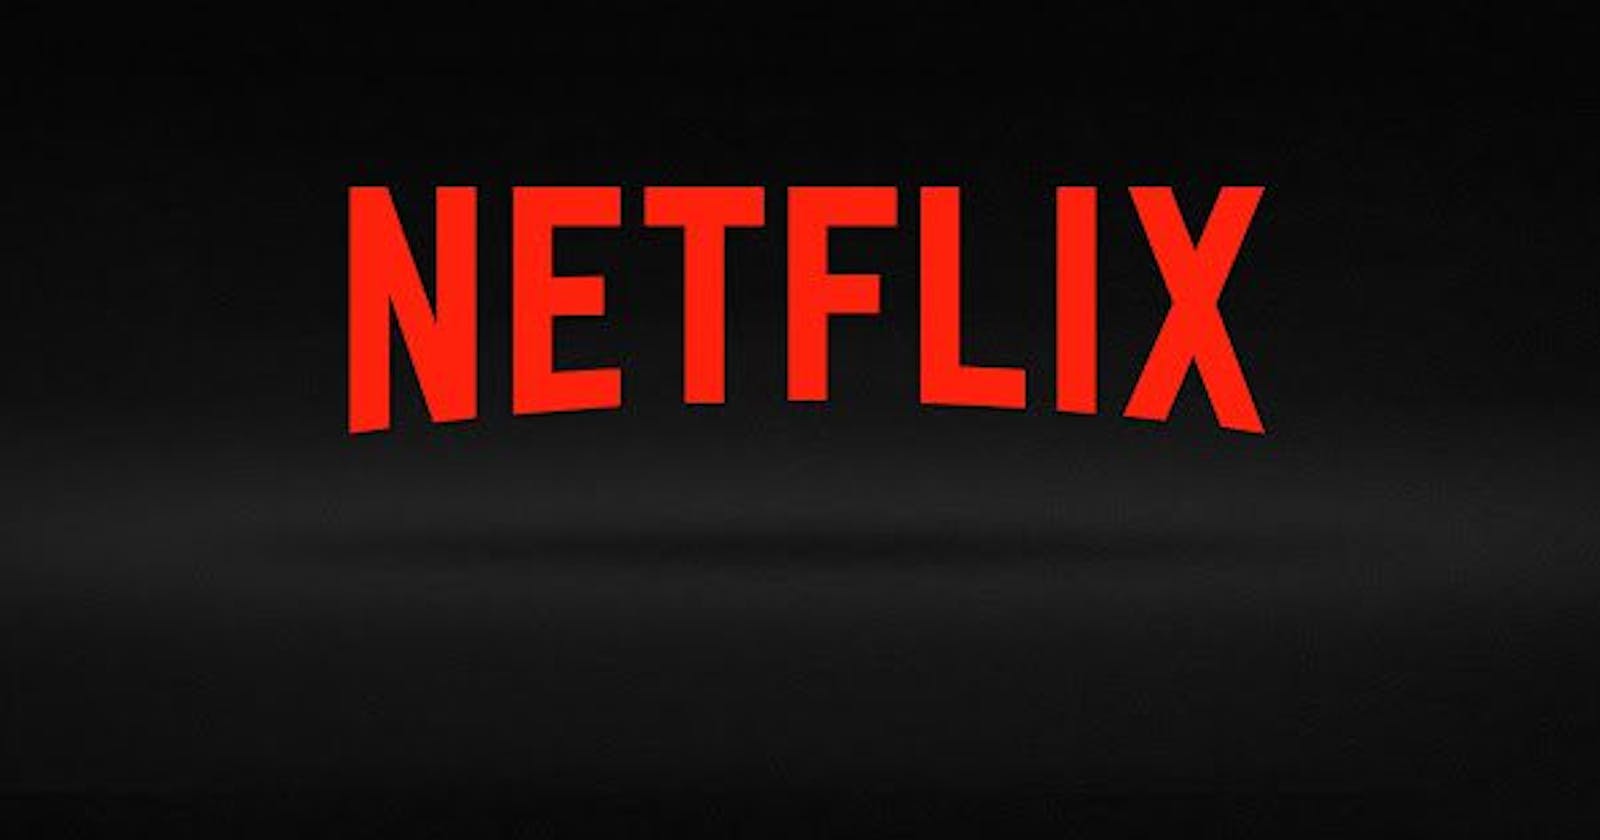 Netflix makes use of AWS Cloud